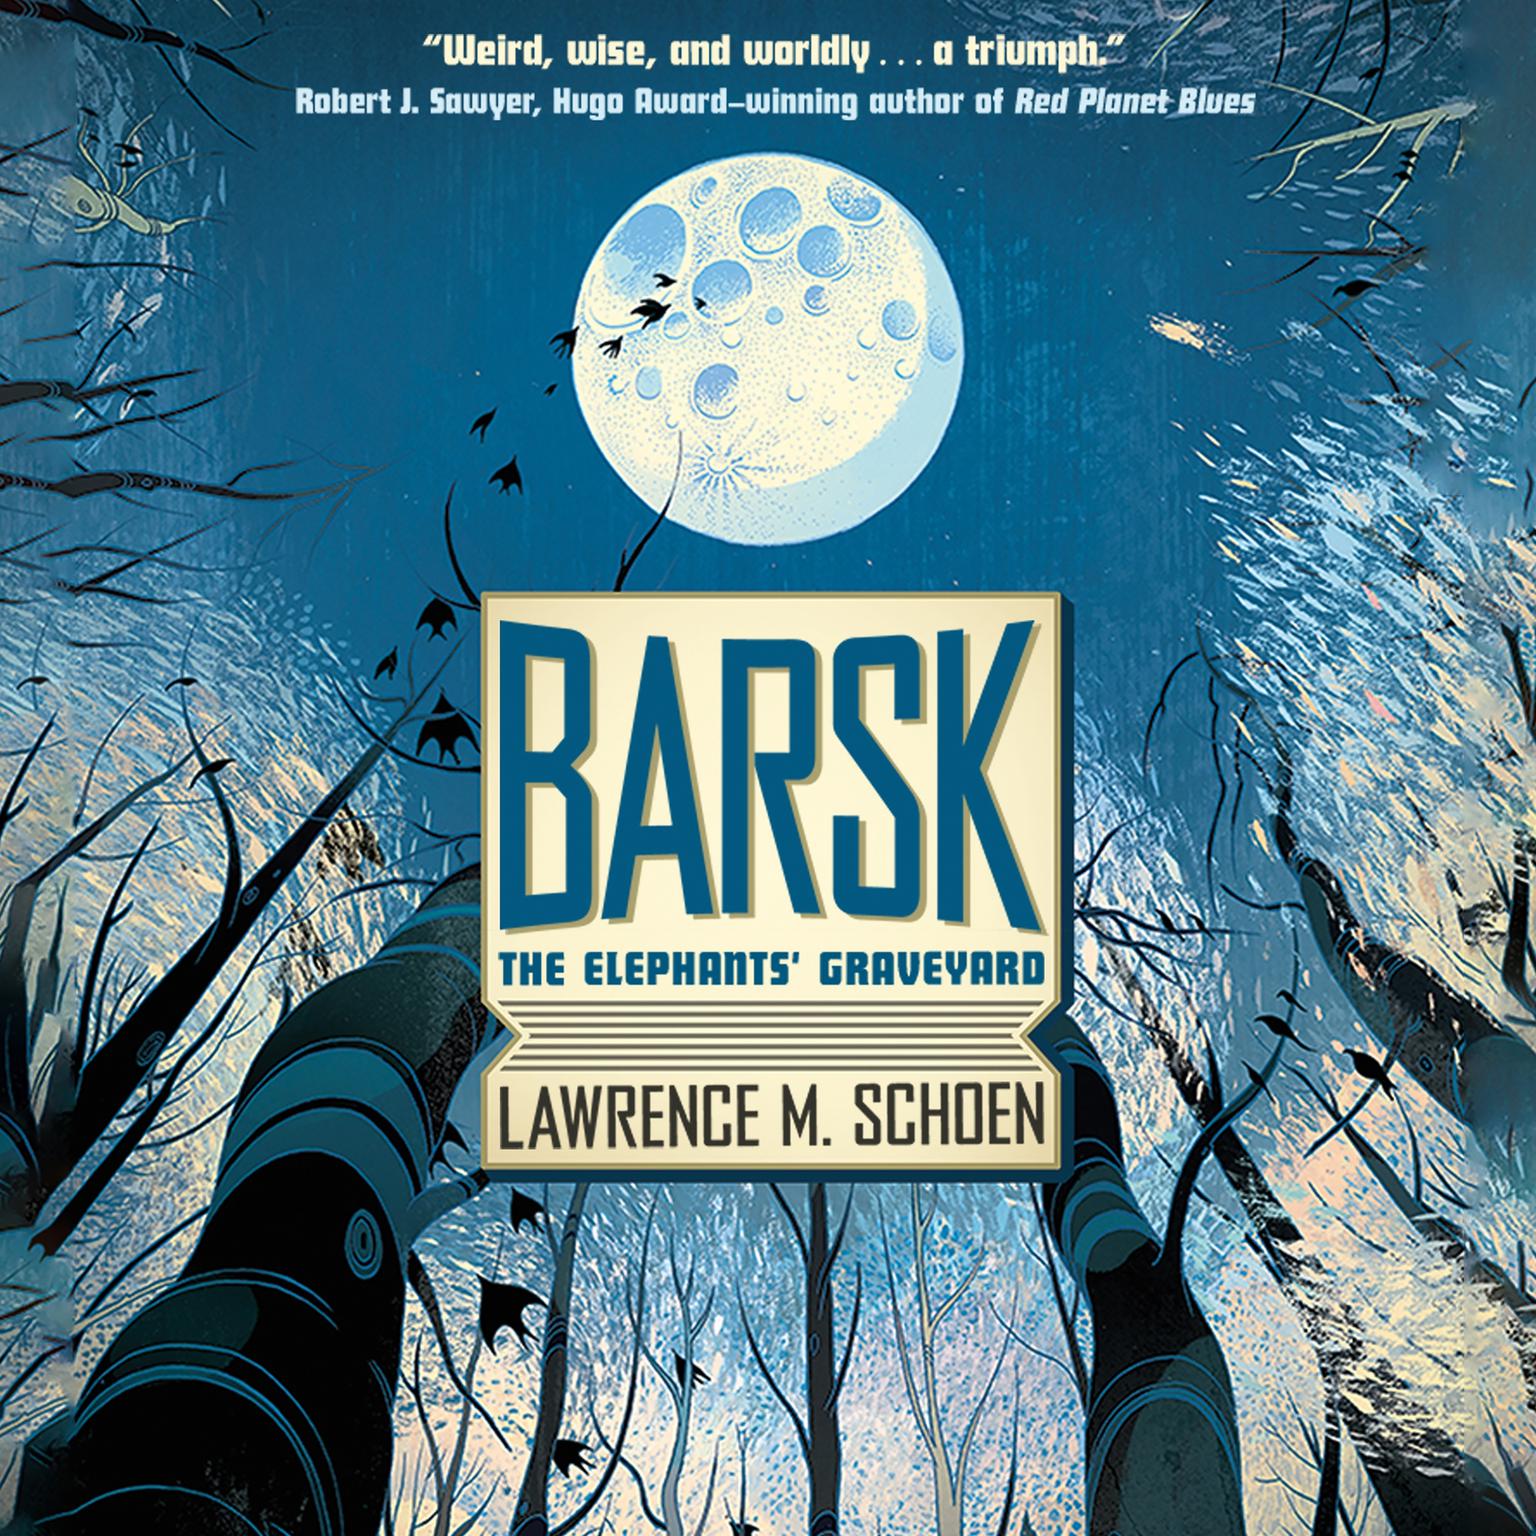 Barsk: The Elephants Graveyard: The Elephants’ Graveyard Audiobook, by Lawrence M. Schoen